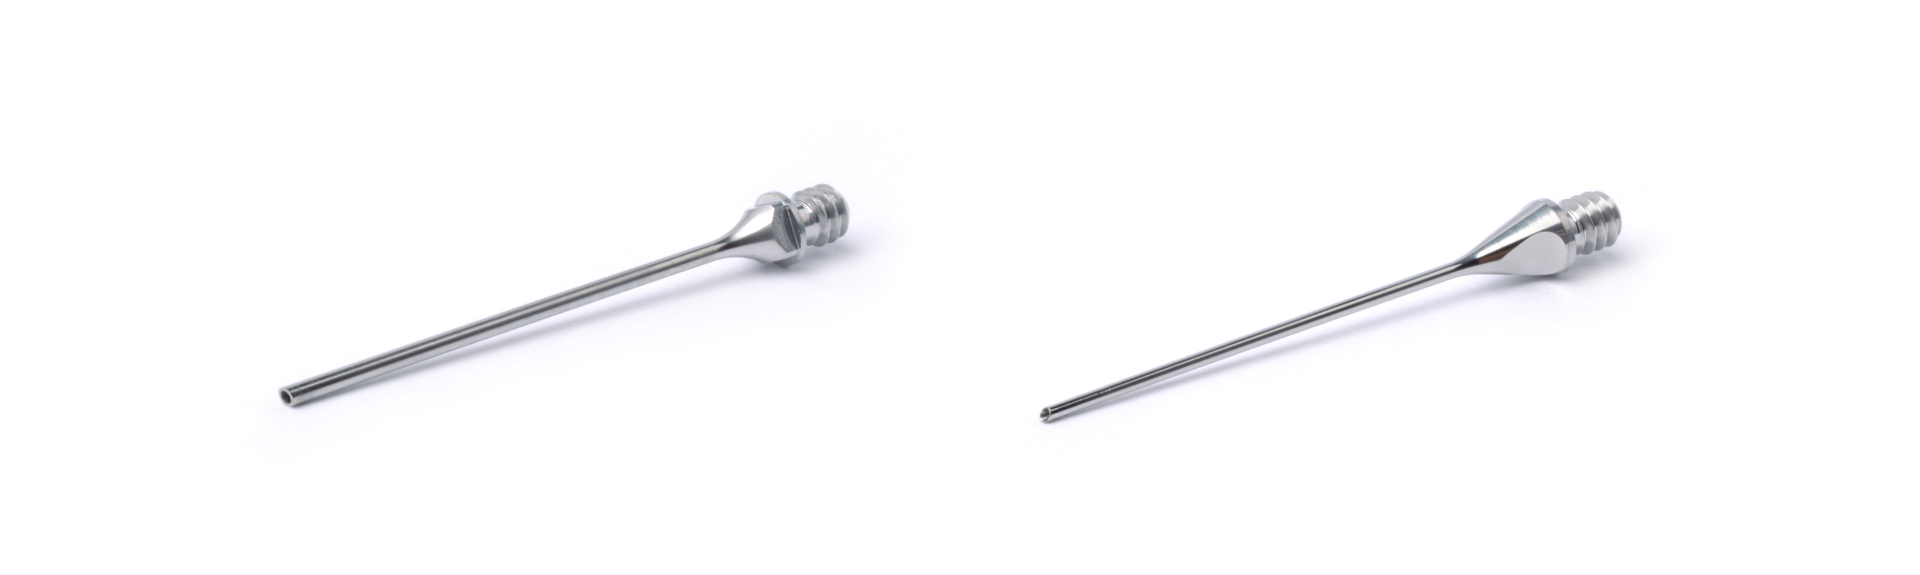 DORC launches new disposable phaco fragmentation needles